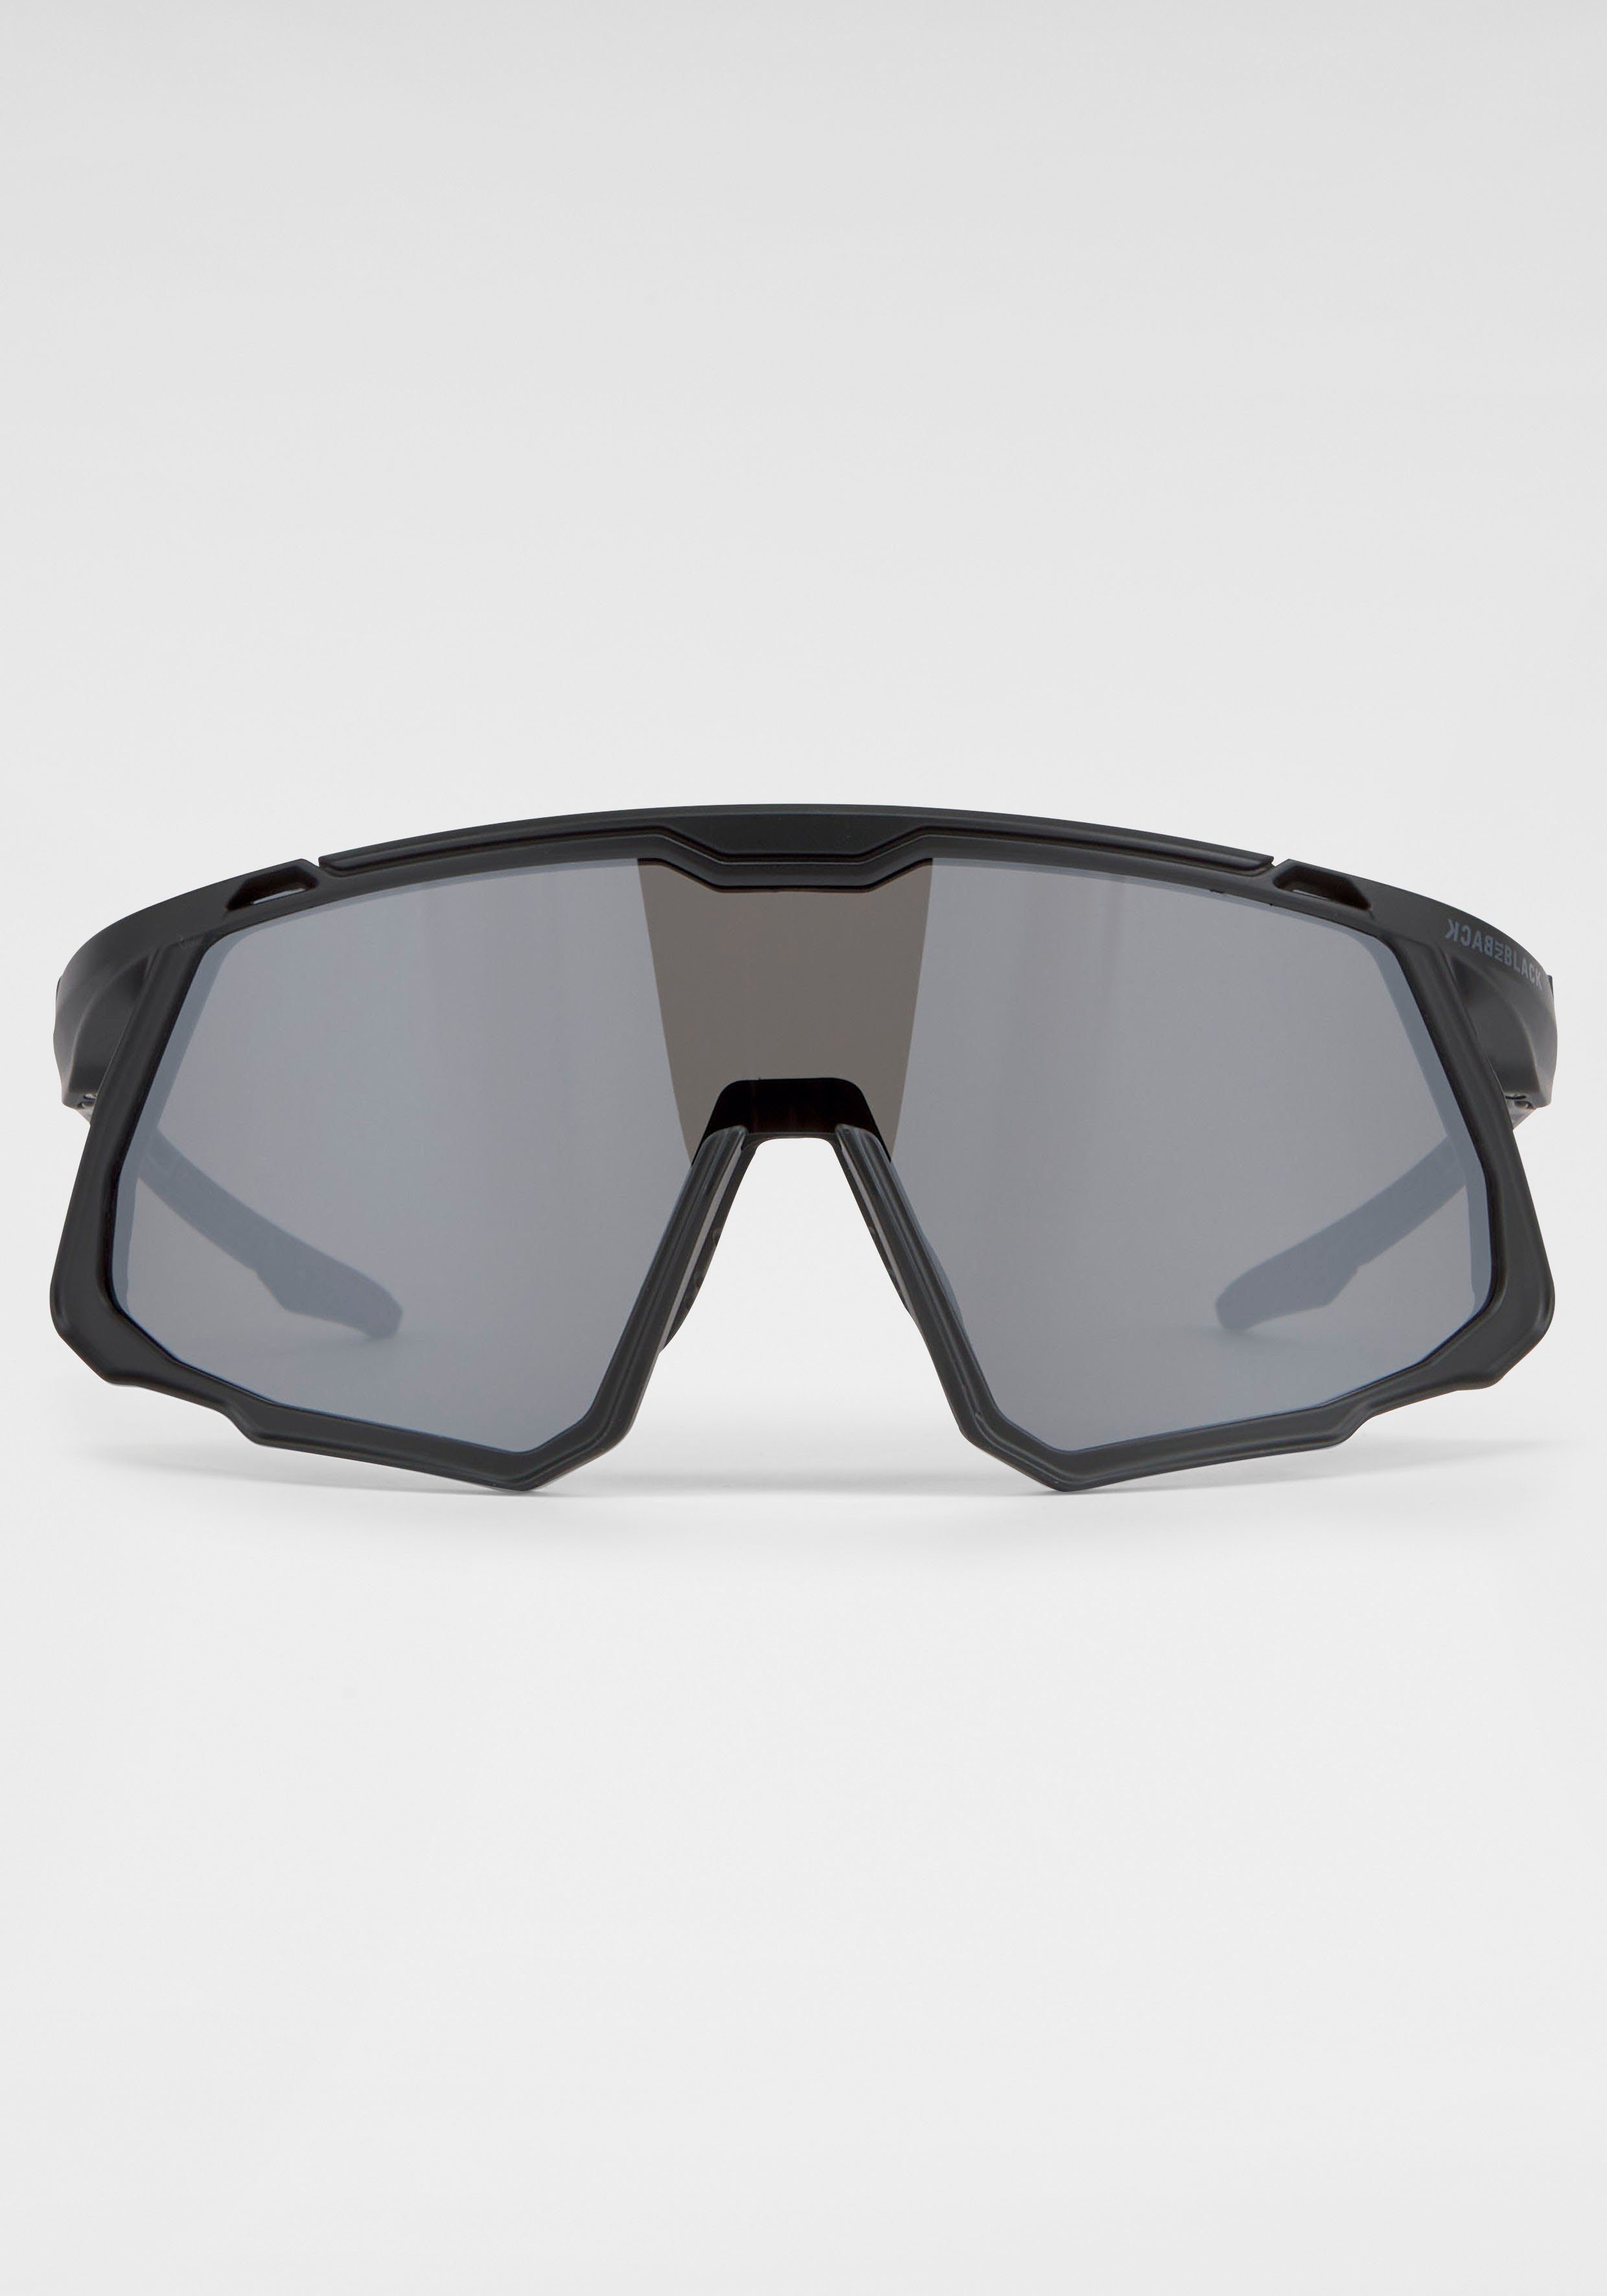 BLACK Form gebogene Eyewear IN Sonnenbrille BACK schwarz